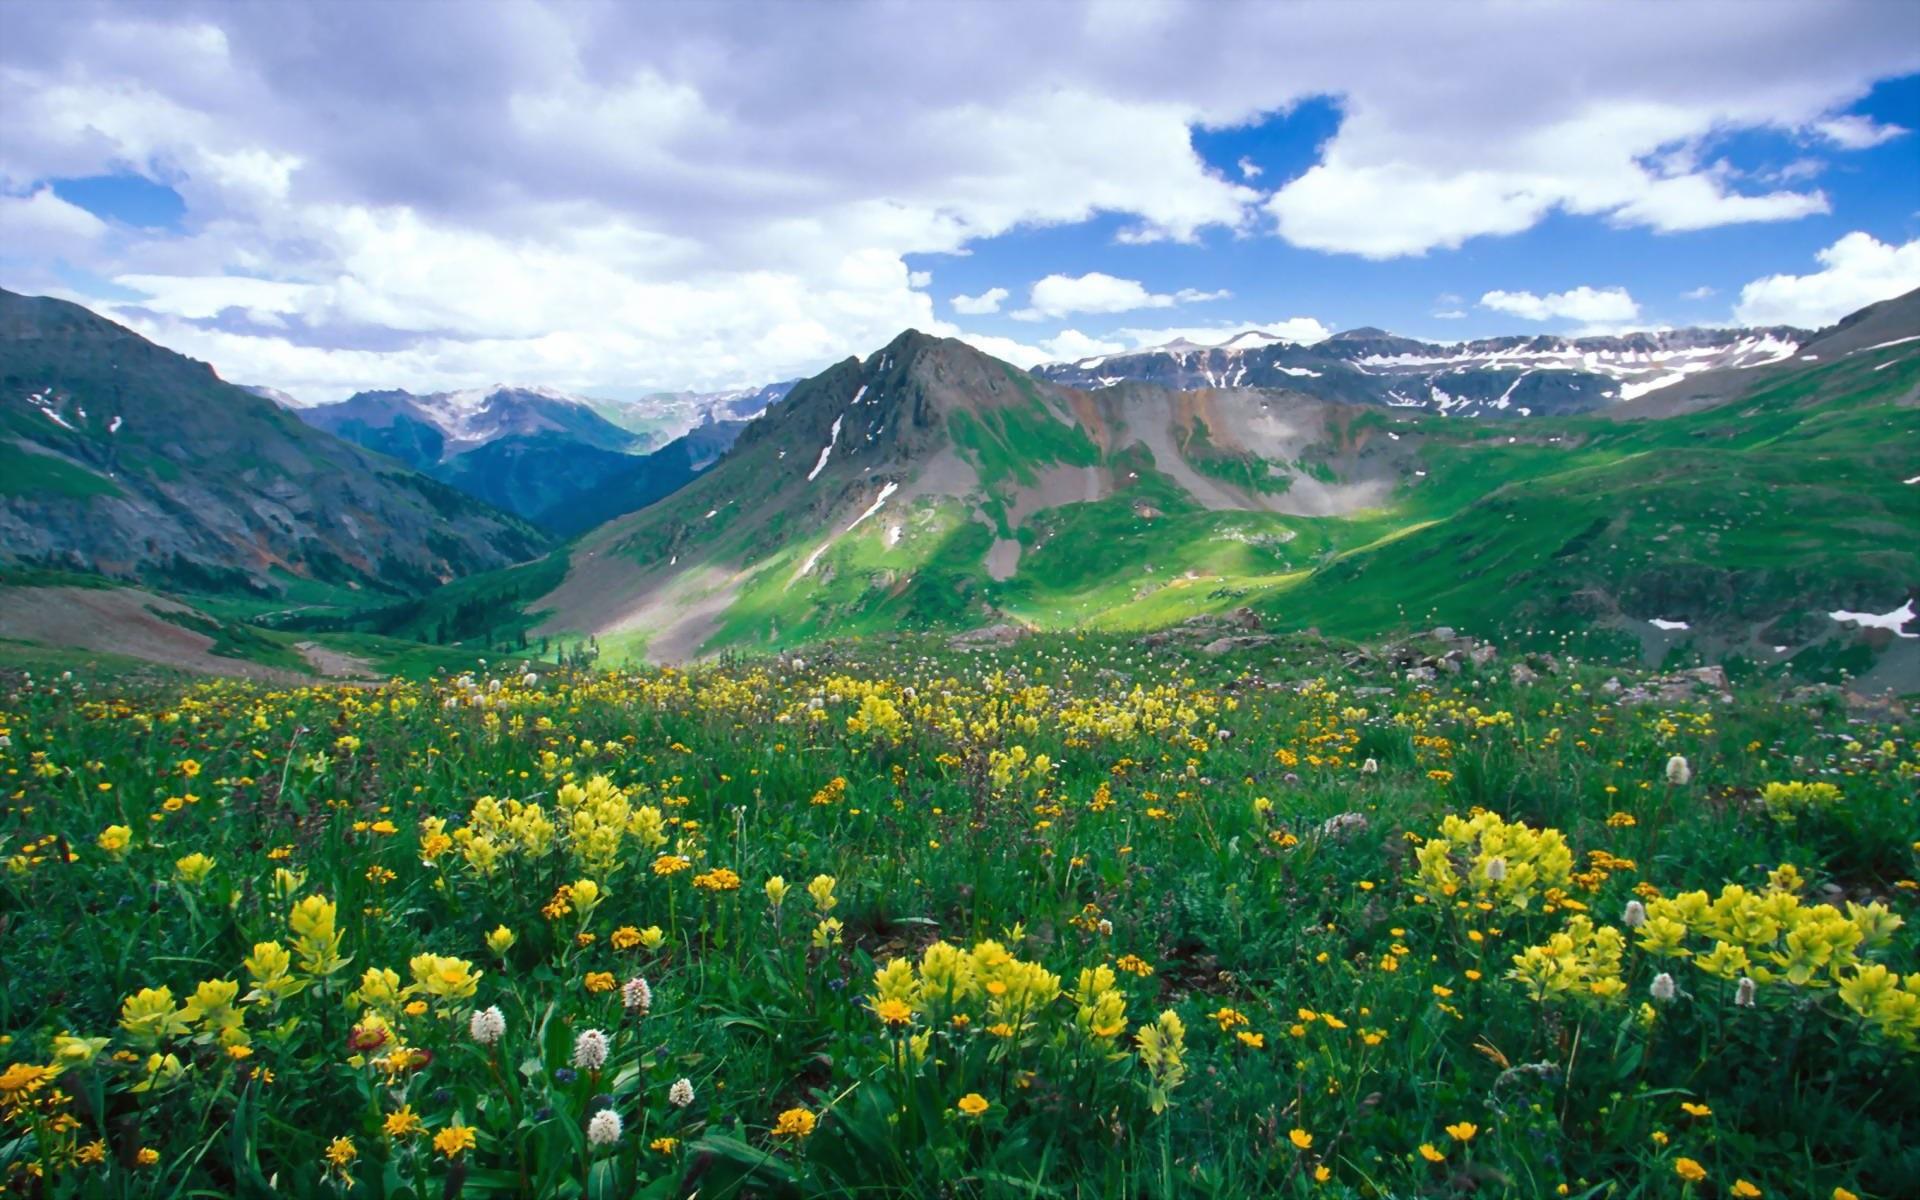 Mountain, Cool Image, HD Nature Wallpaper, Peace, Widescreen